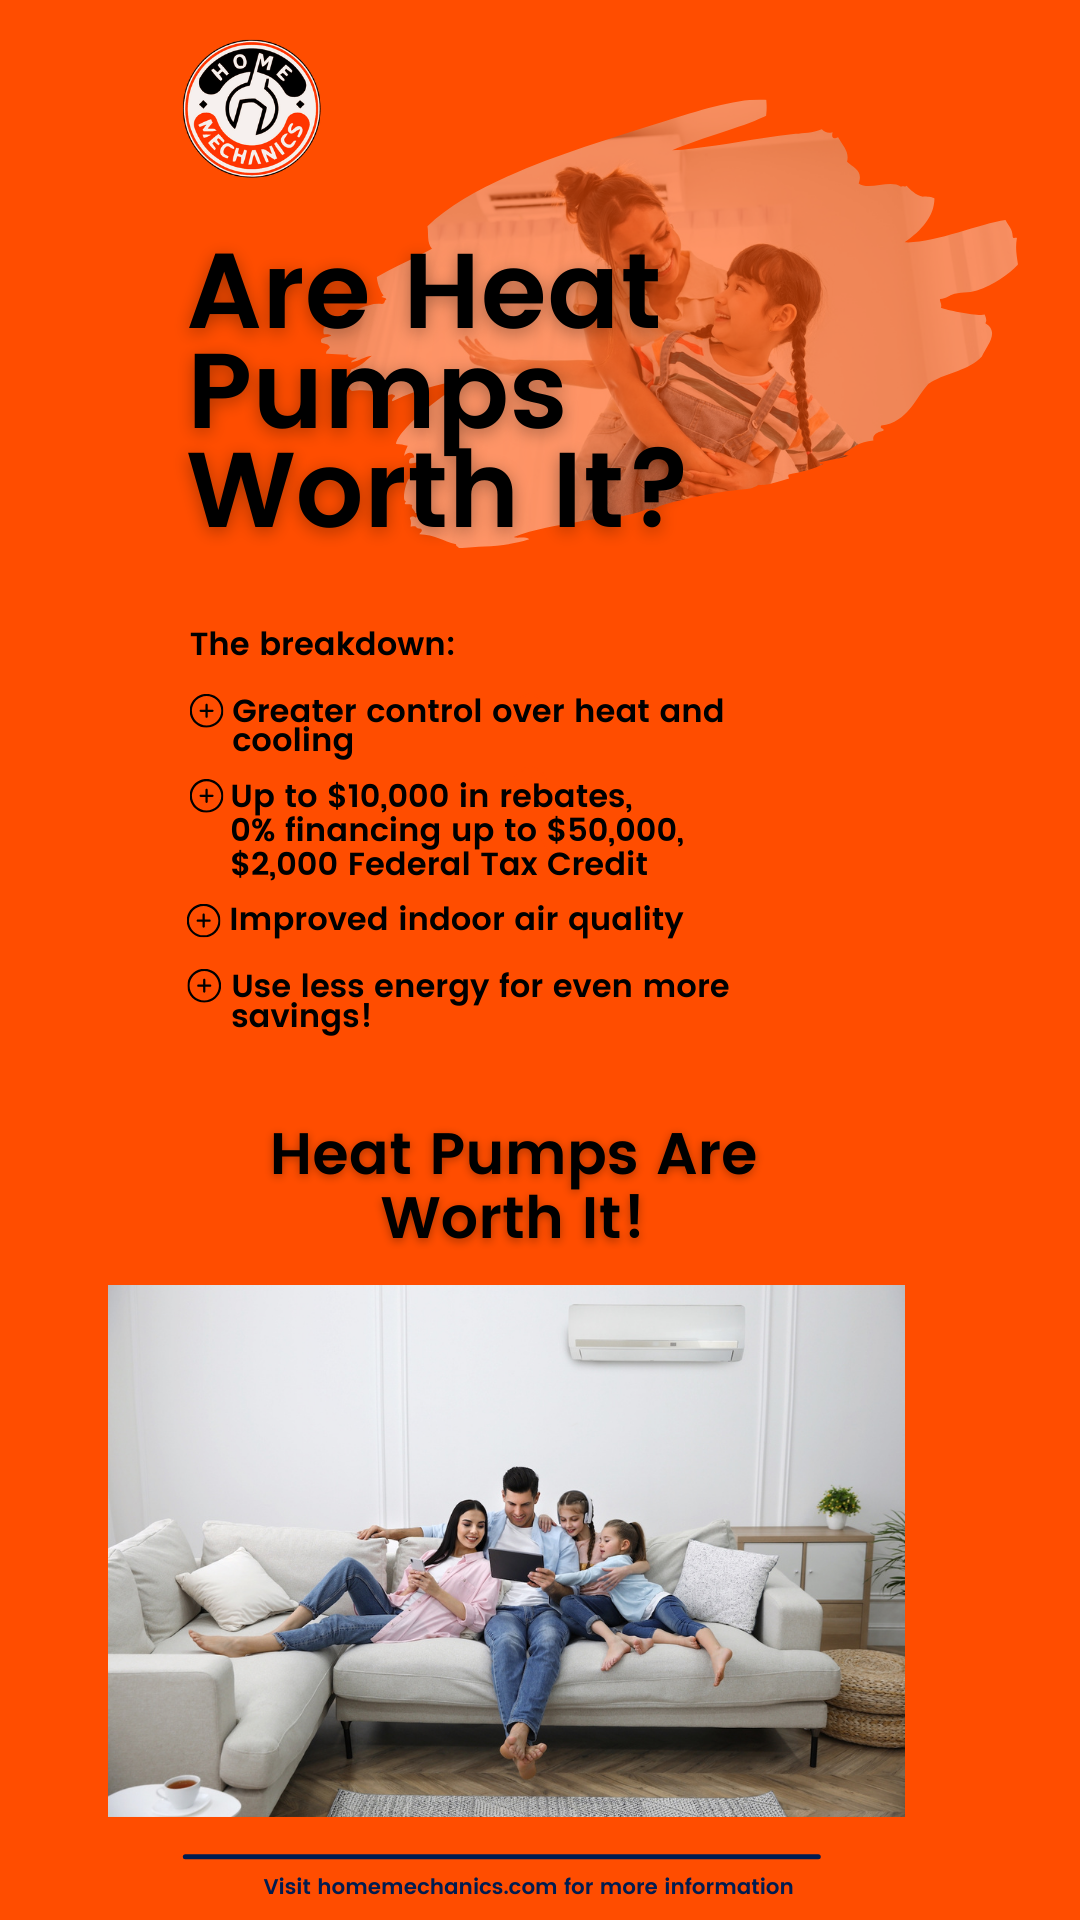 Are Heat Pumps Worth It